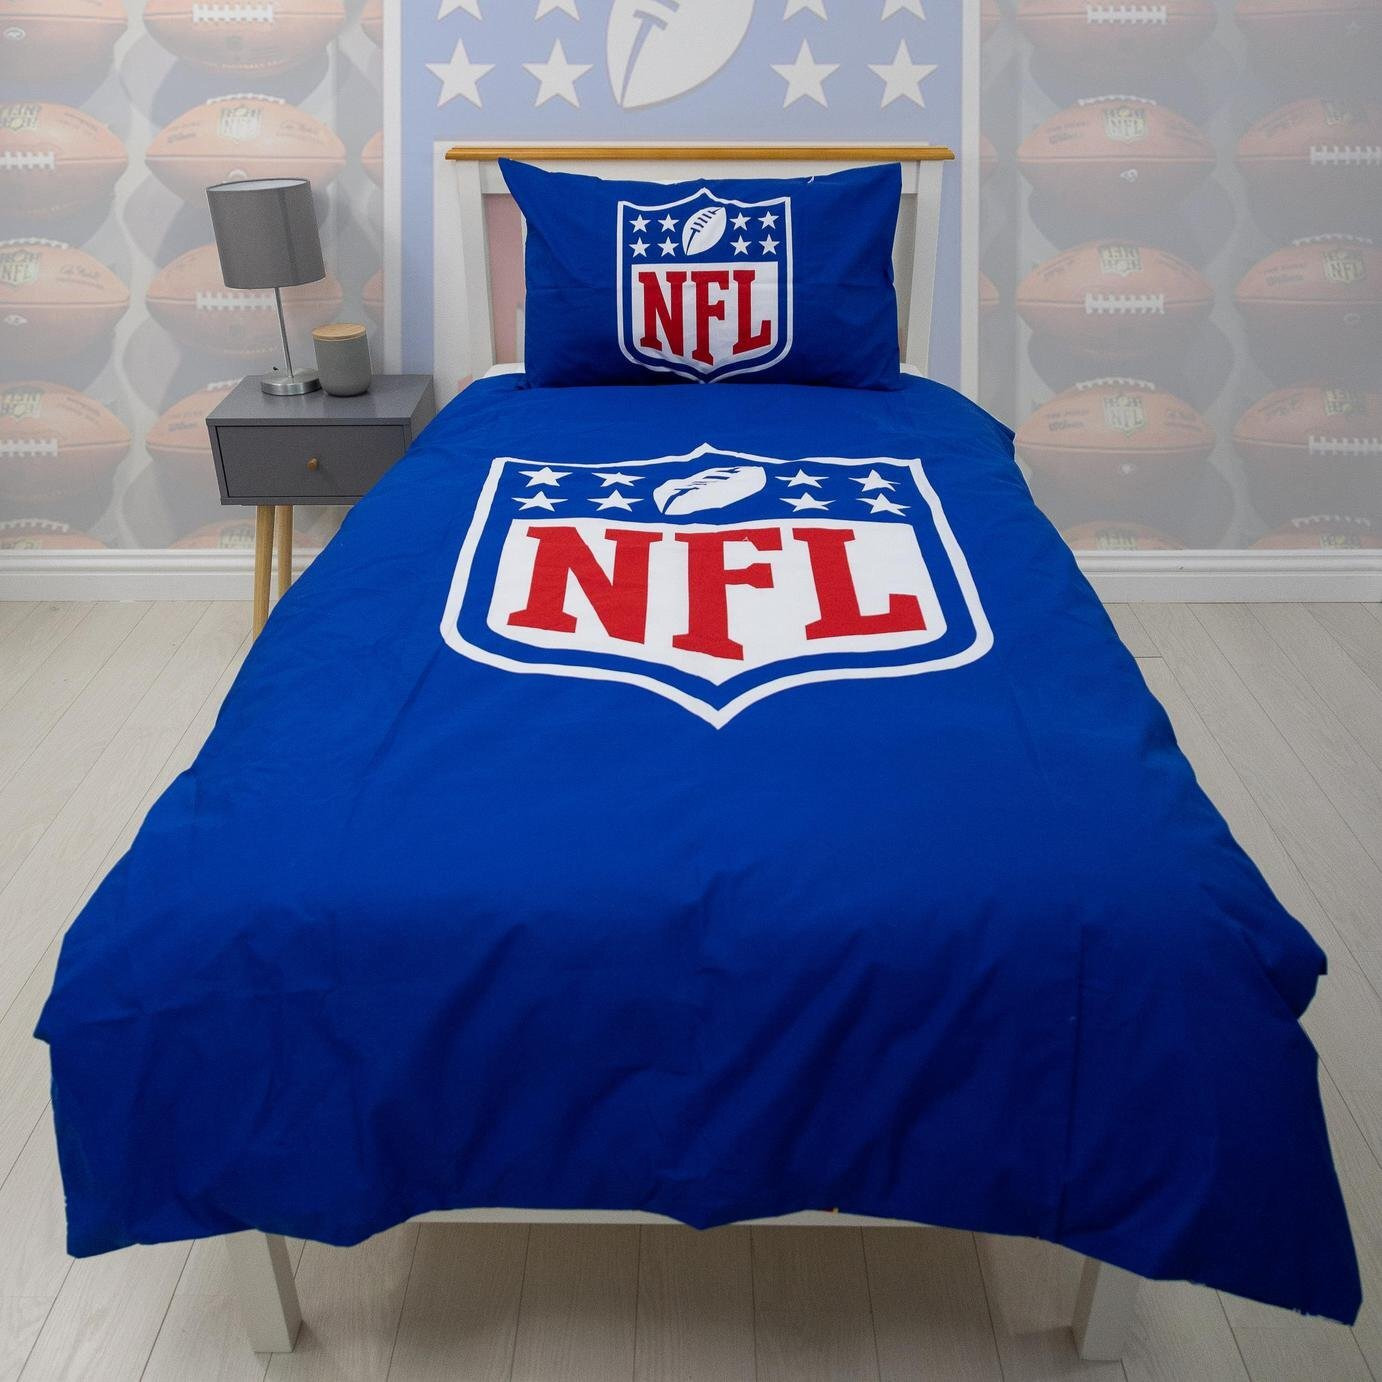 NFL Sports Blue Kids Bedding Set - Single - image 1